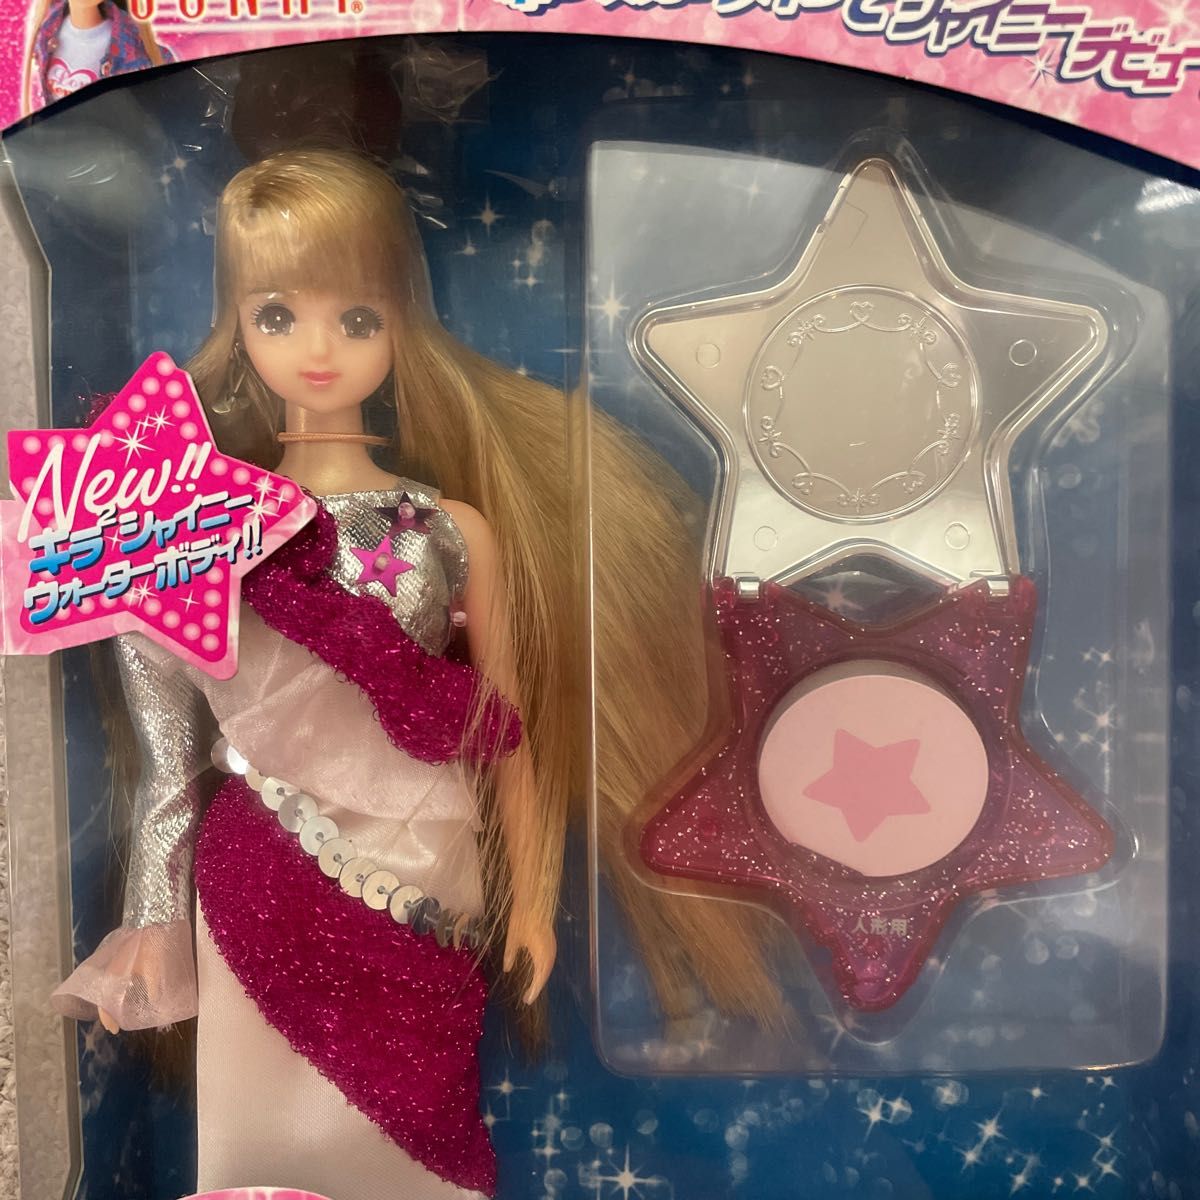 1997 Special Edition Brunette Version Club Wedd Barbie(バービー